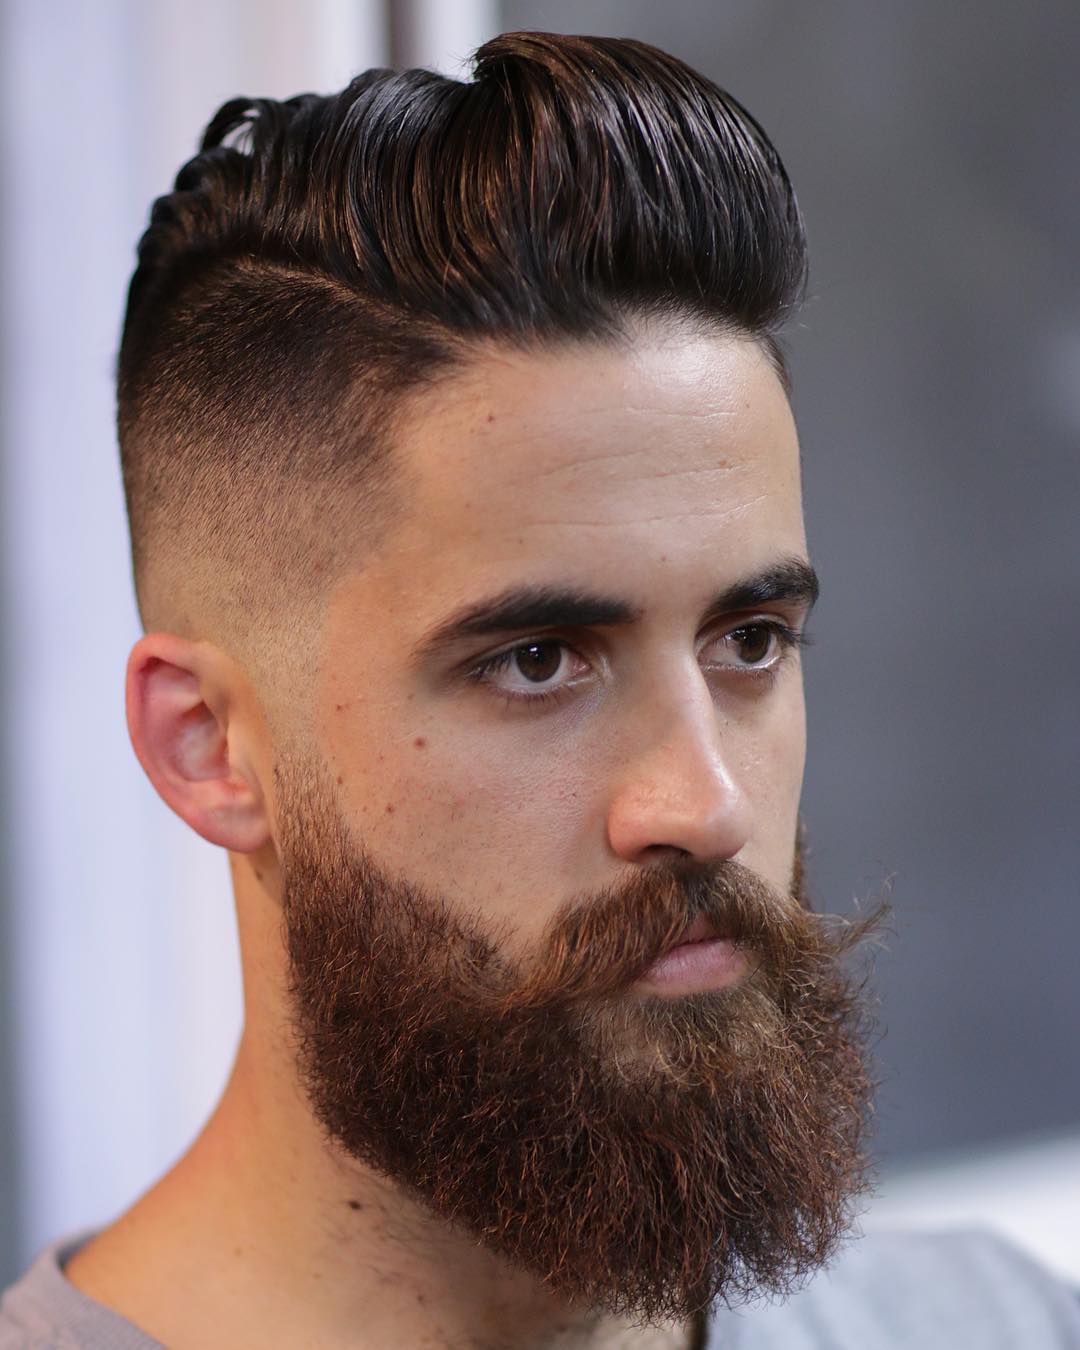 cutsbycameron beard style mustache style latest mens hairstyles 2018